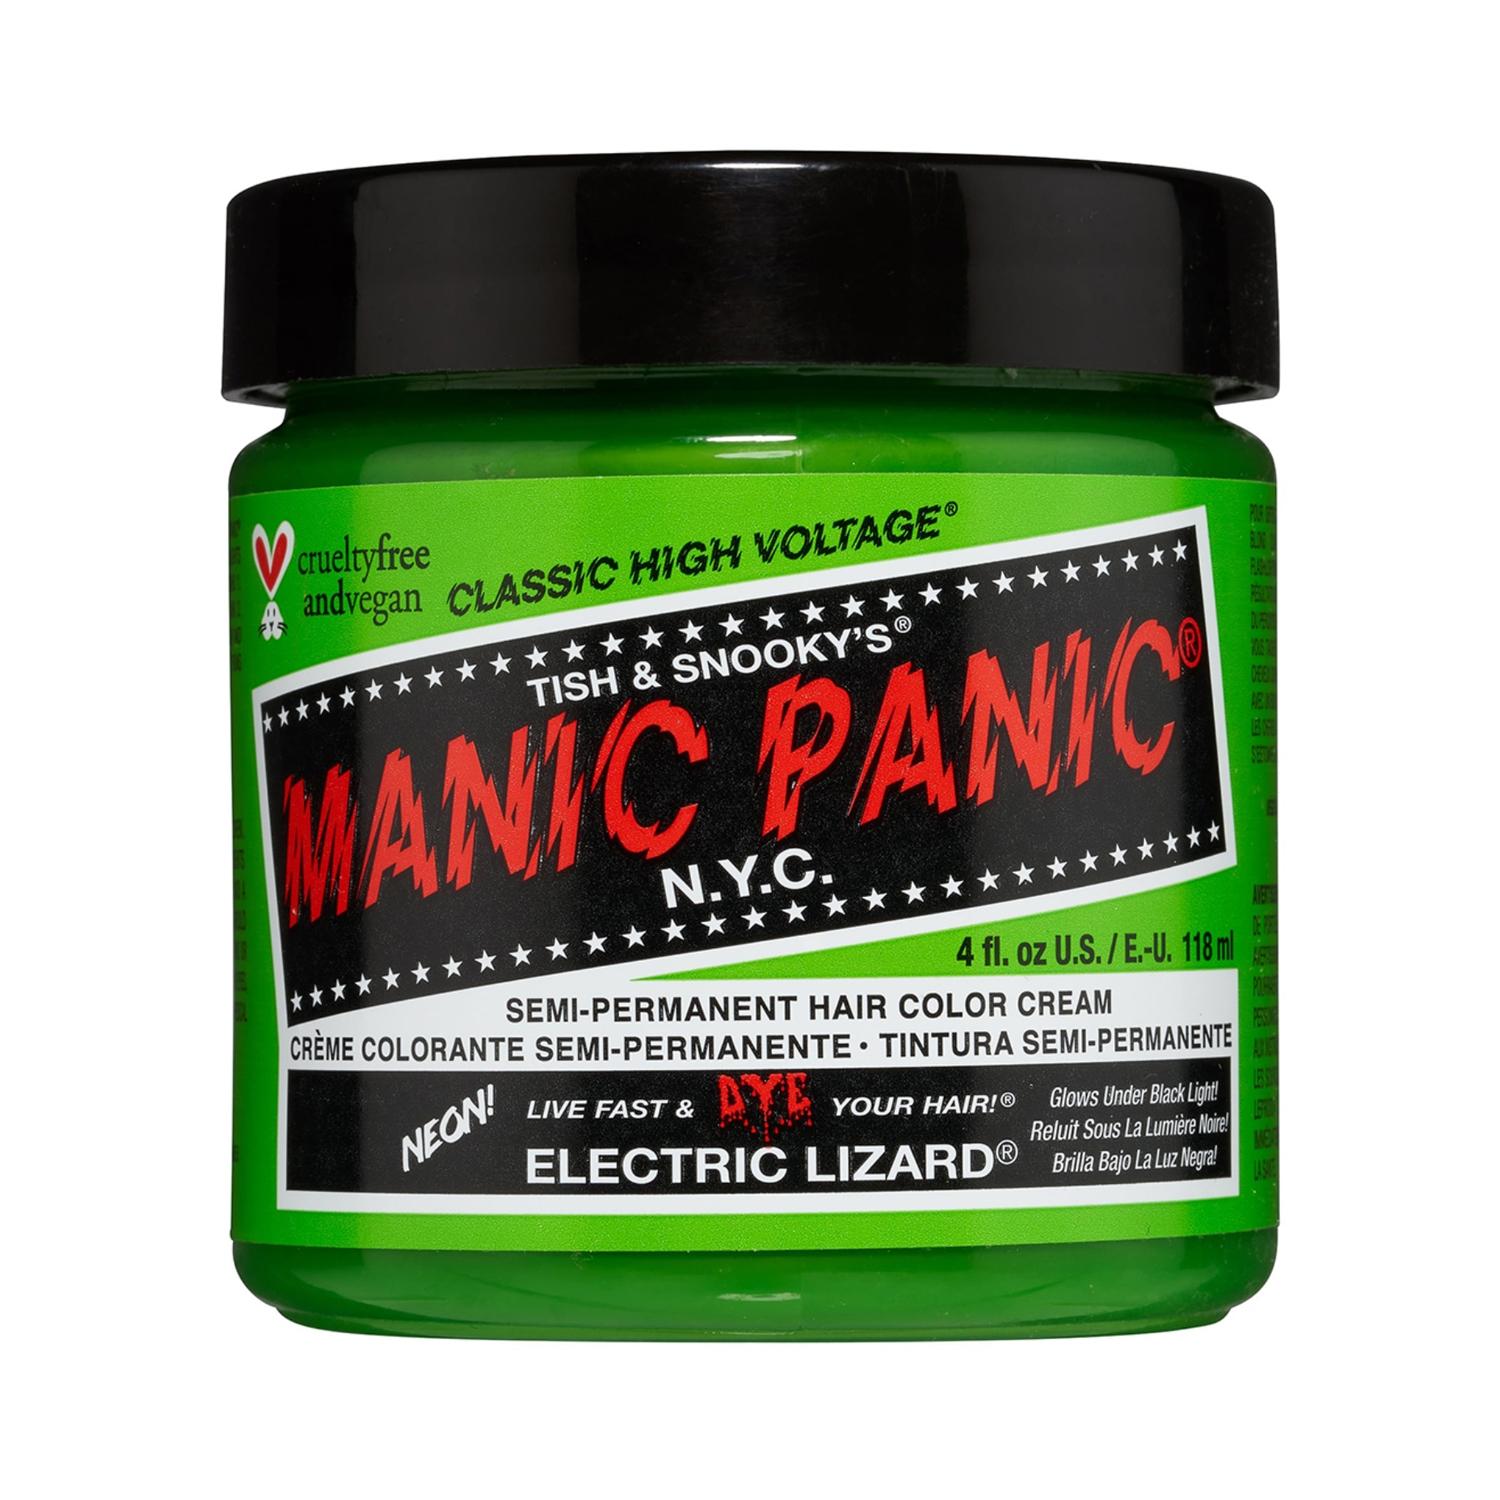 manic-panic-classic-high-voltage-semi-permanent-hair-color-cream---electric-lizard-(118ml)